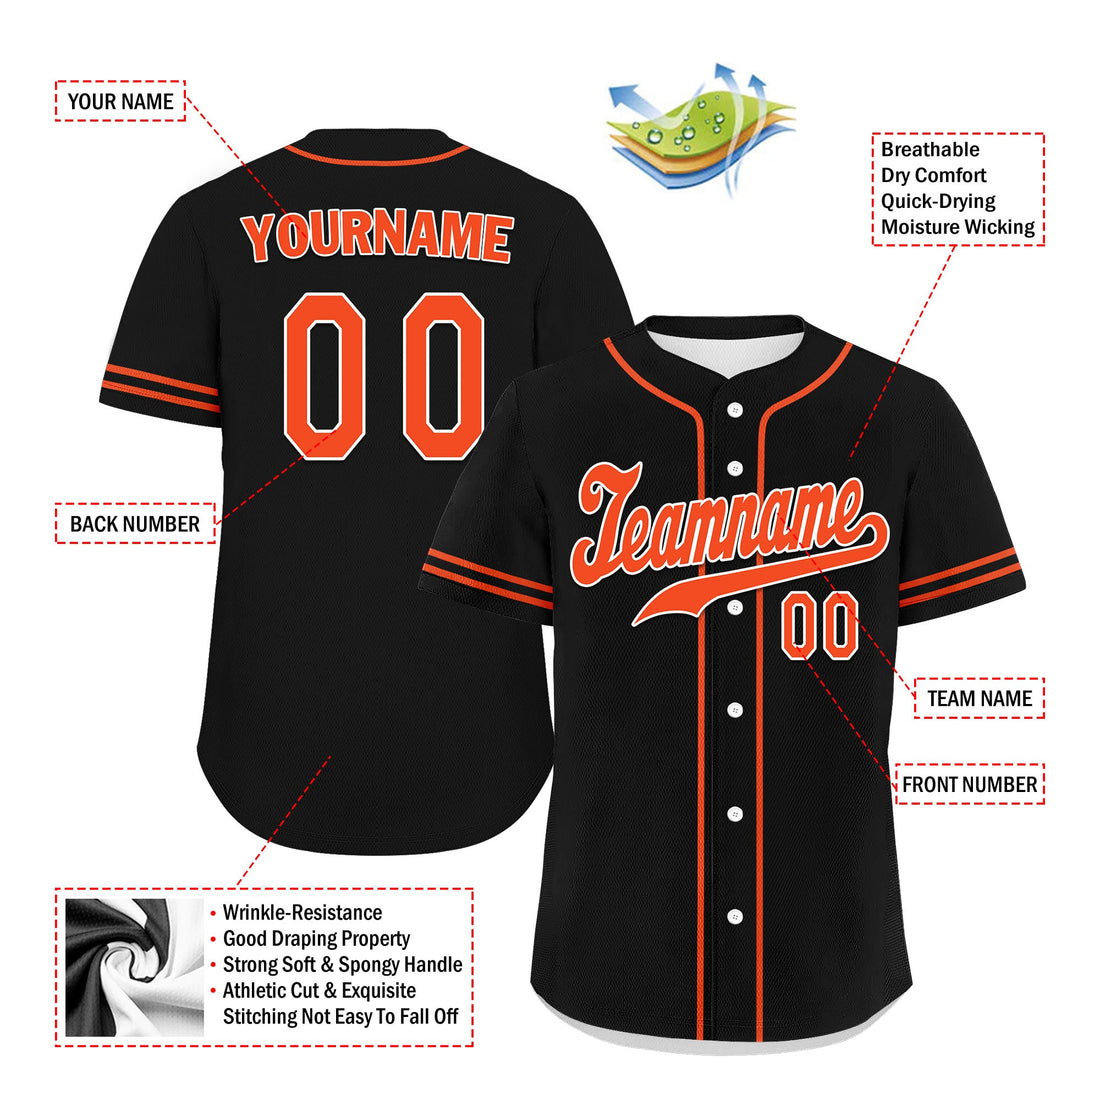 Custom Black Classic Style Orange Personalized Authentic Baseball Jersey UN002-bd0b00d8-b9